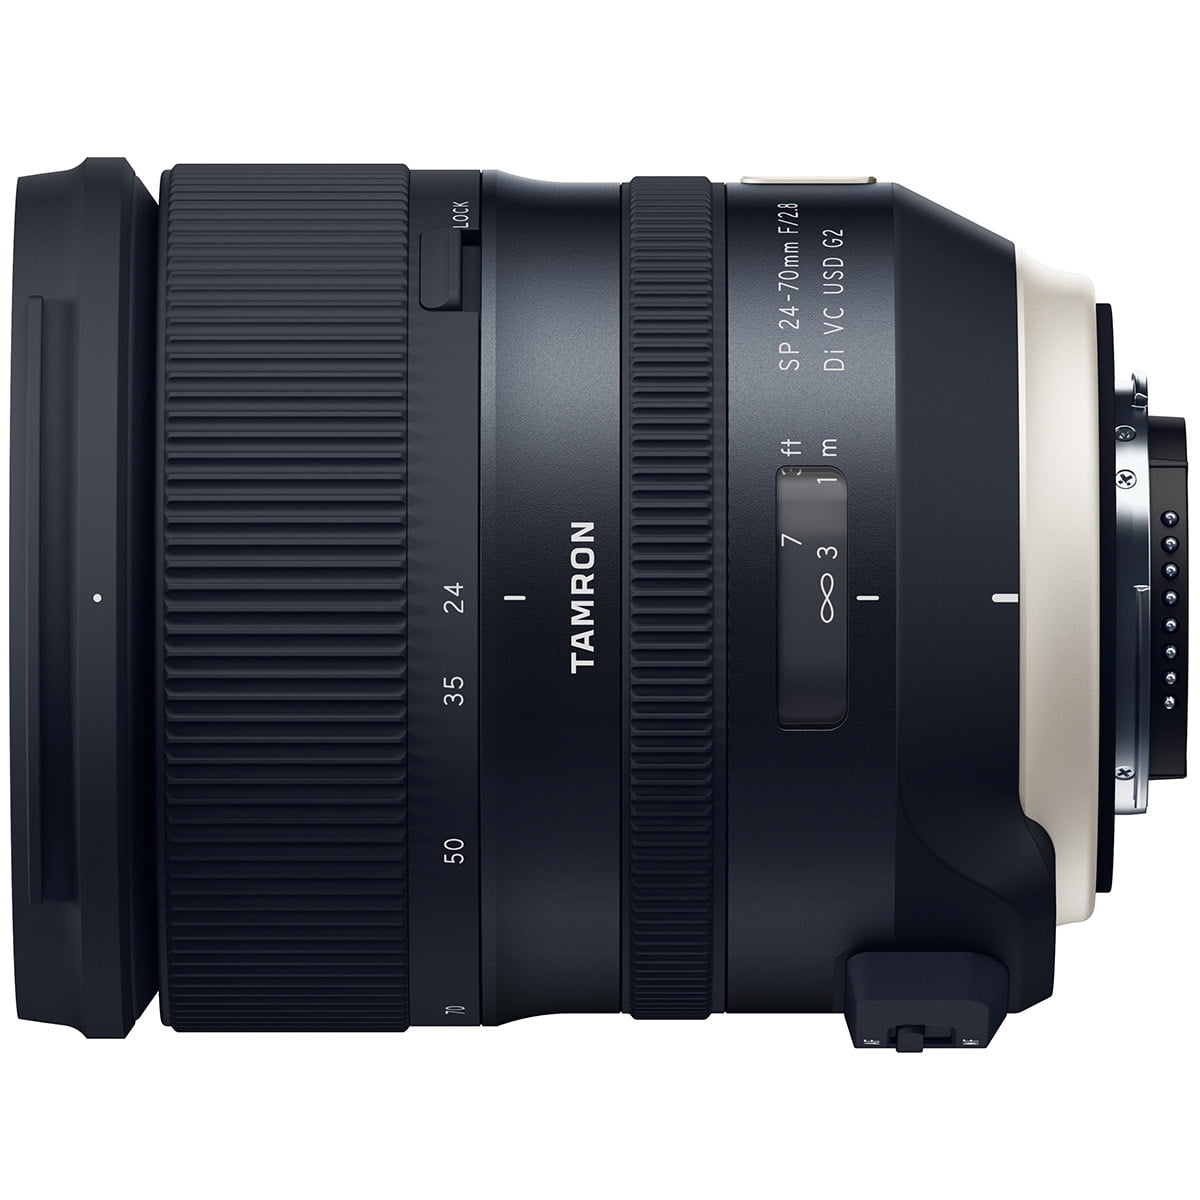 Tamron 24-70mm f/2.8 Di VC G2 USD SP Zoom Lens for Nikon